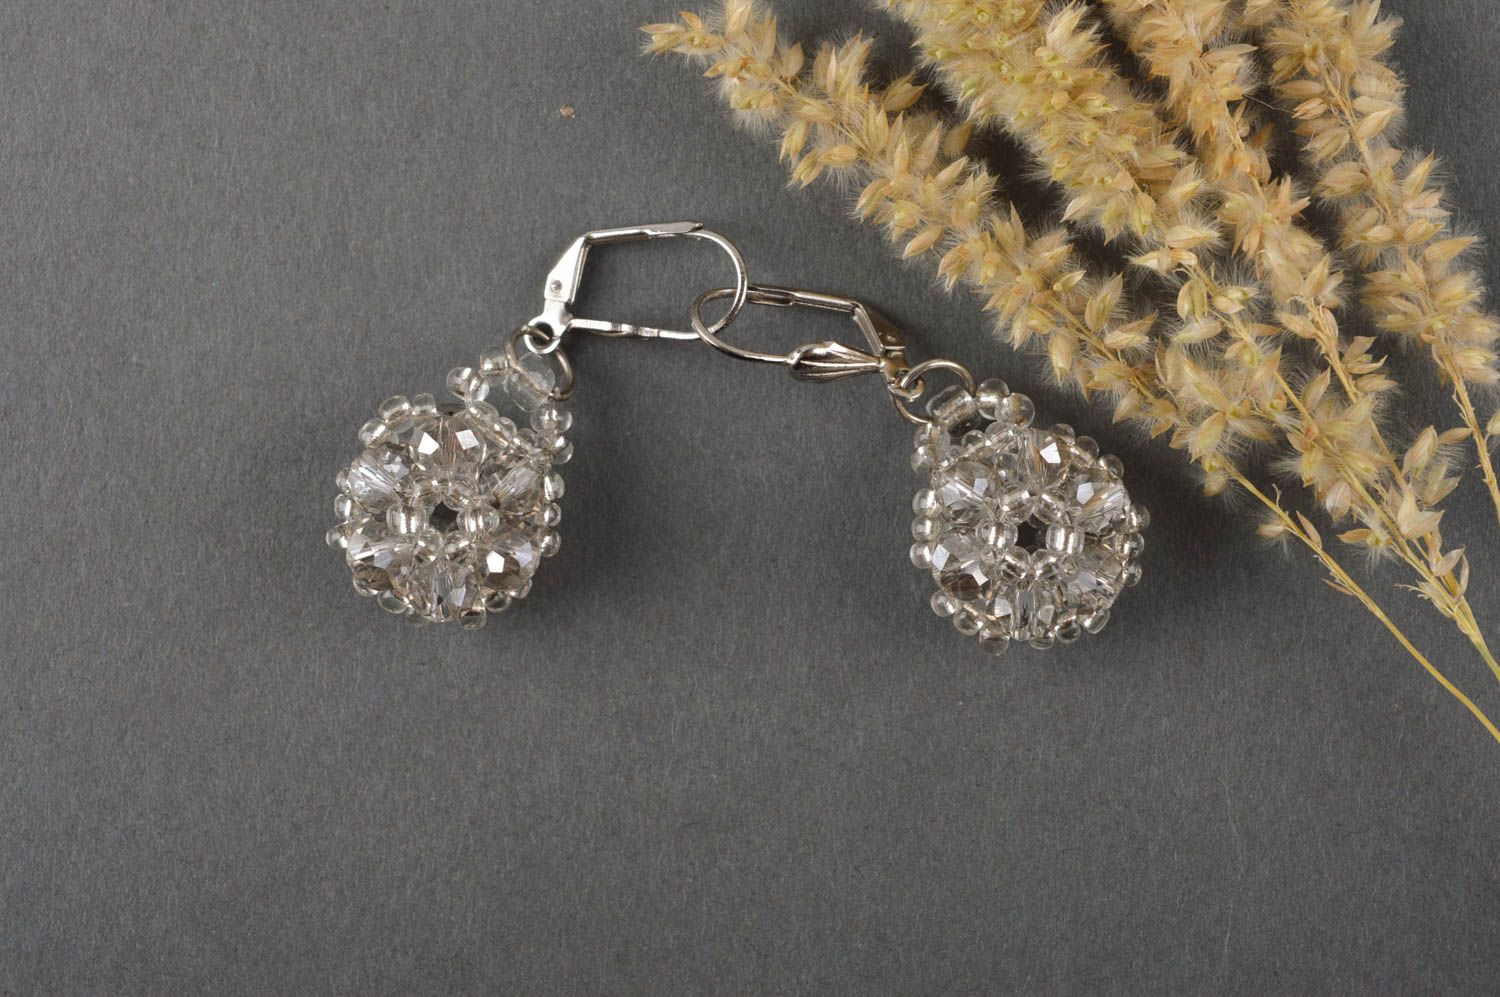 Handmade crystal earrings with charms evening jewelry handmade beaded accessory photo 1